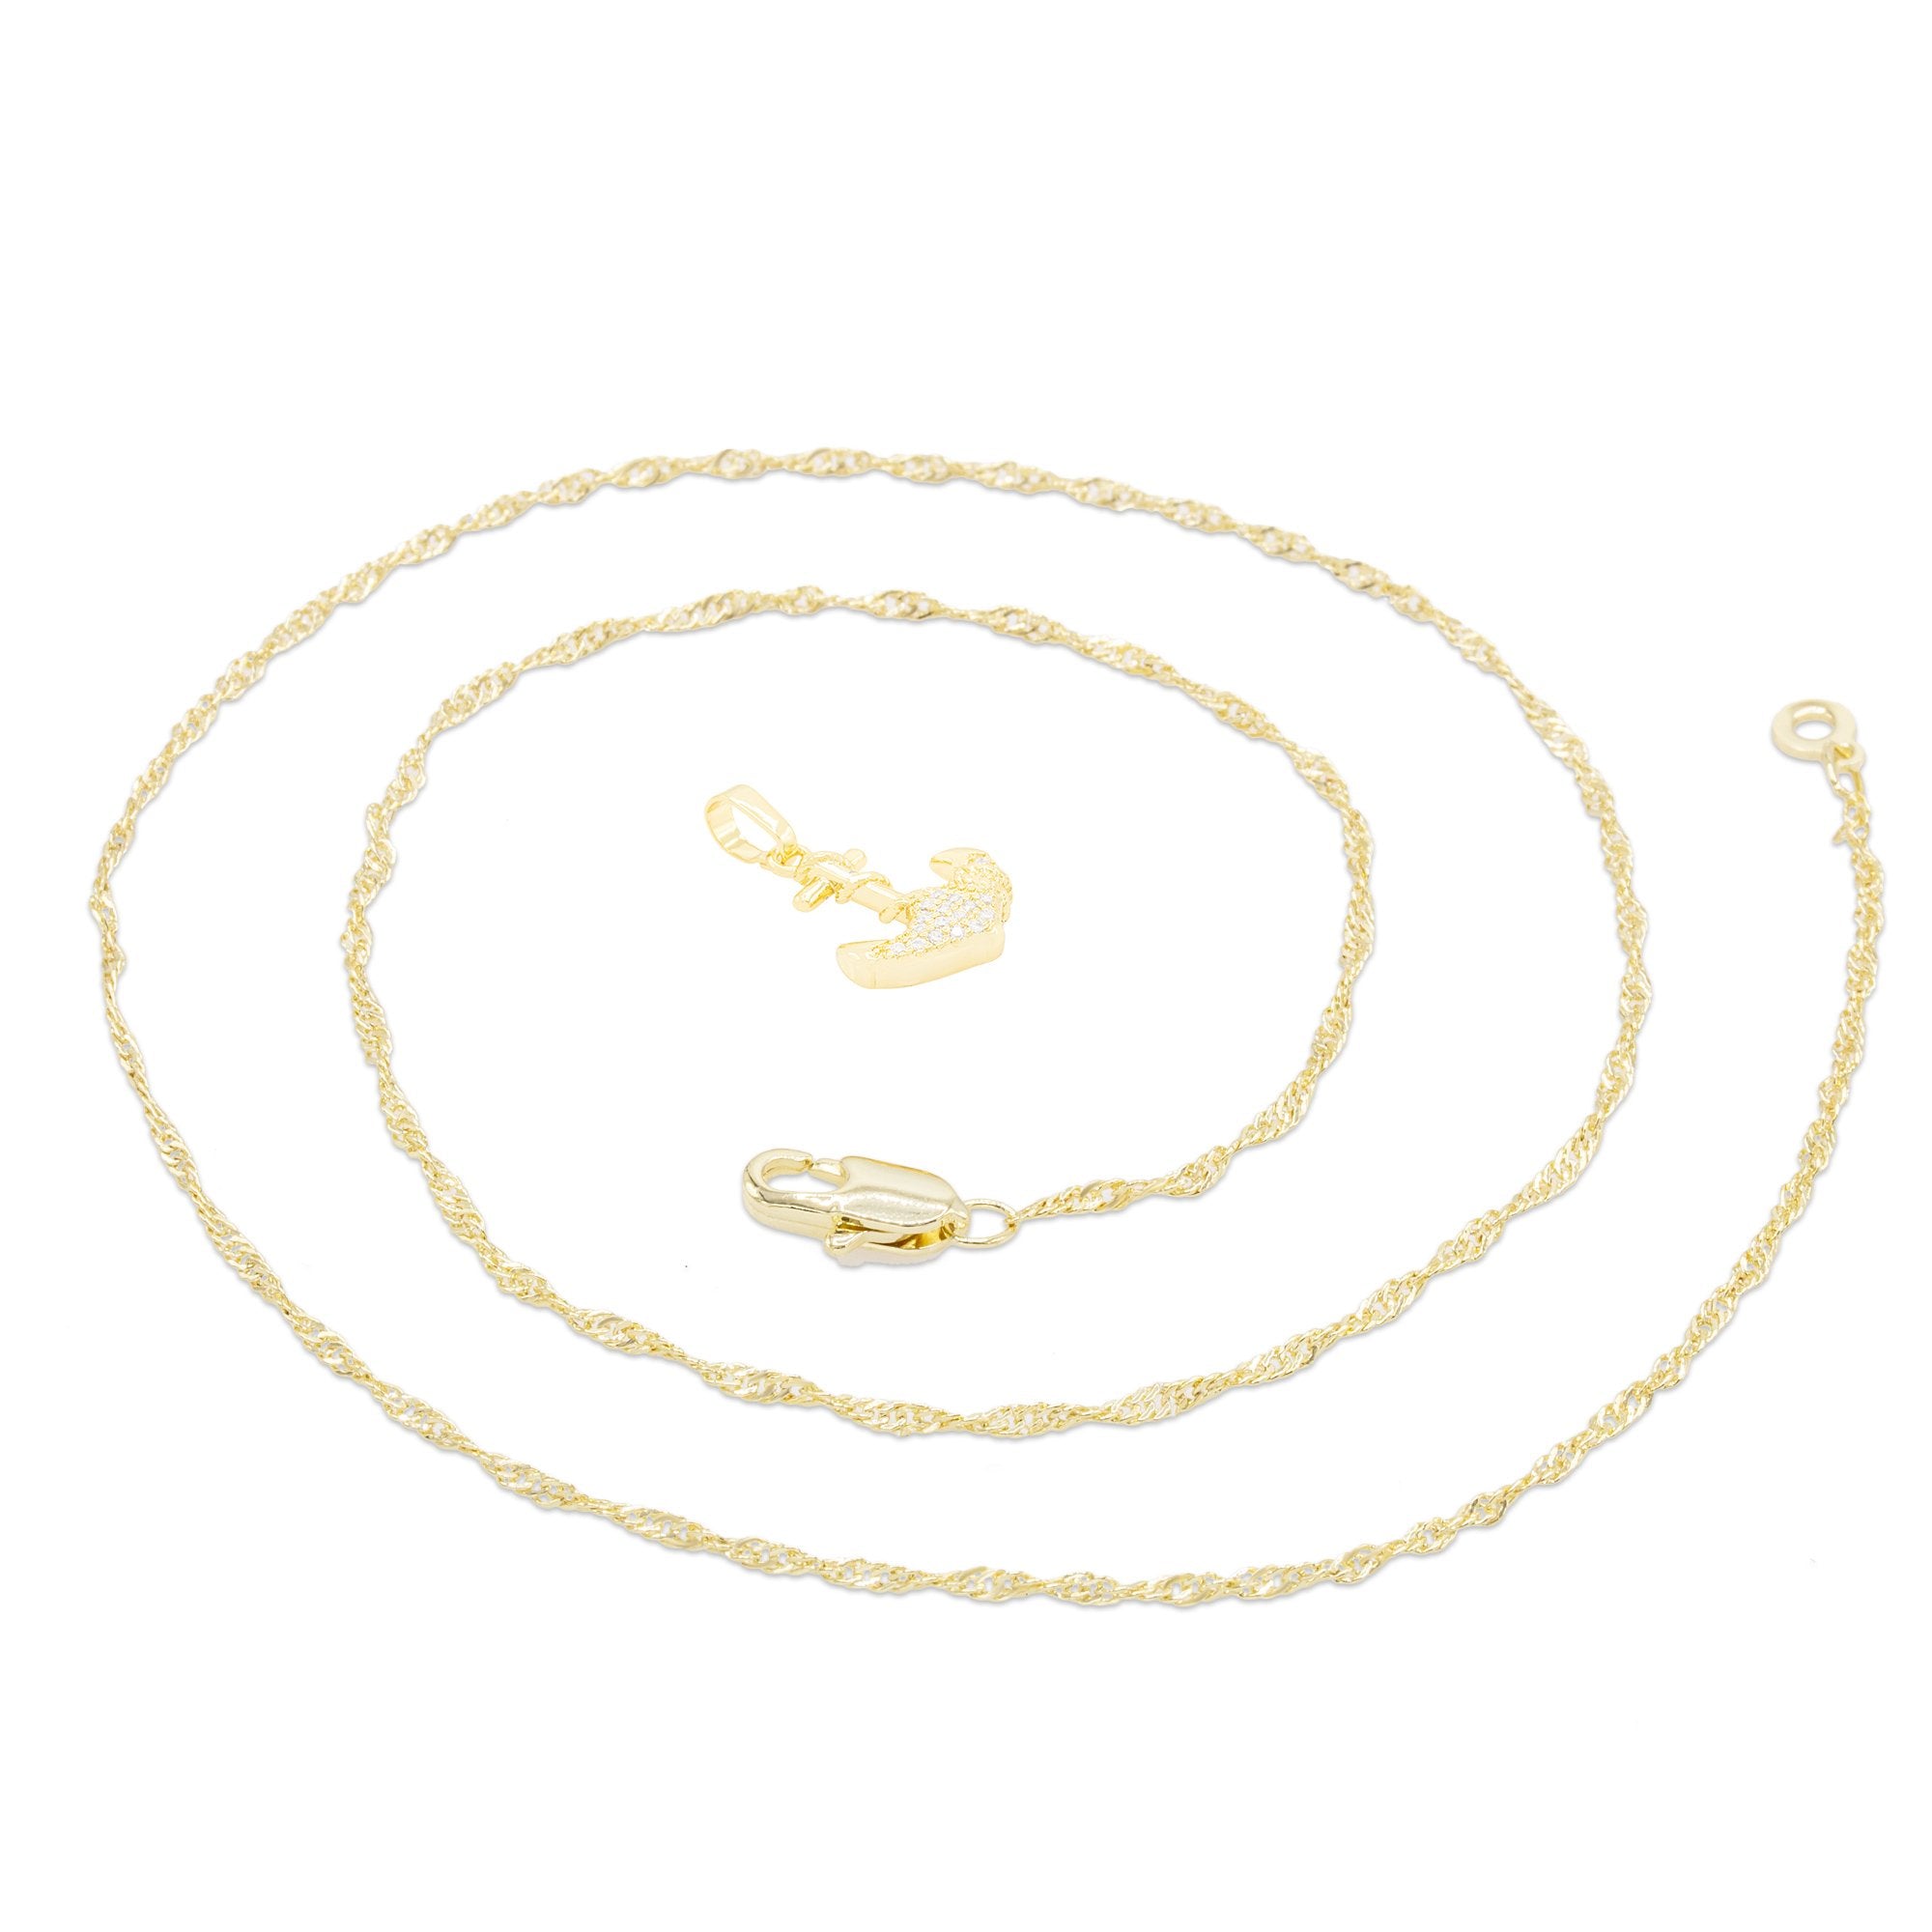 Anchor Cross Cubic Zirconia Pendant 14K Gold Filled Necklace Set